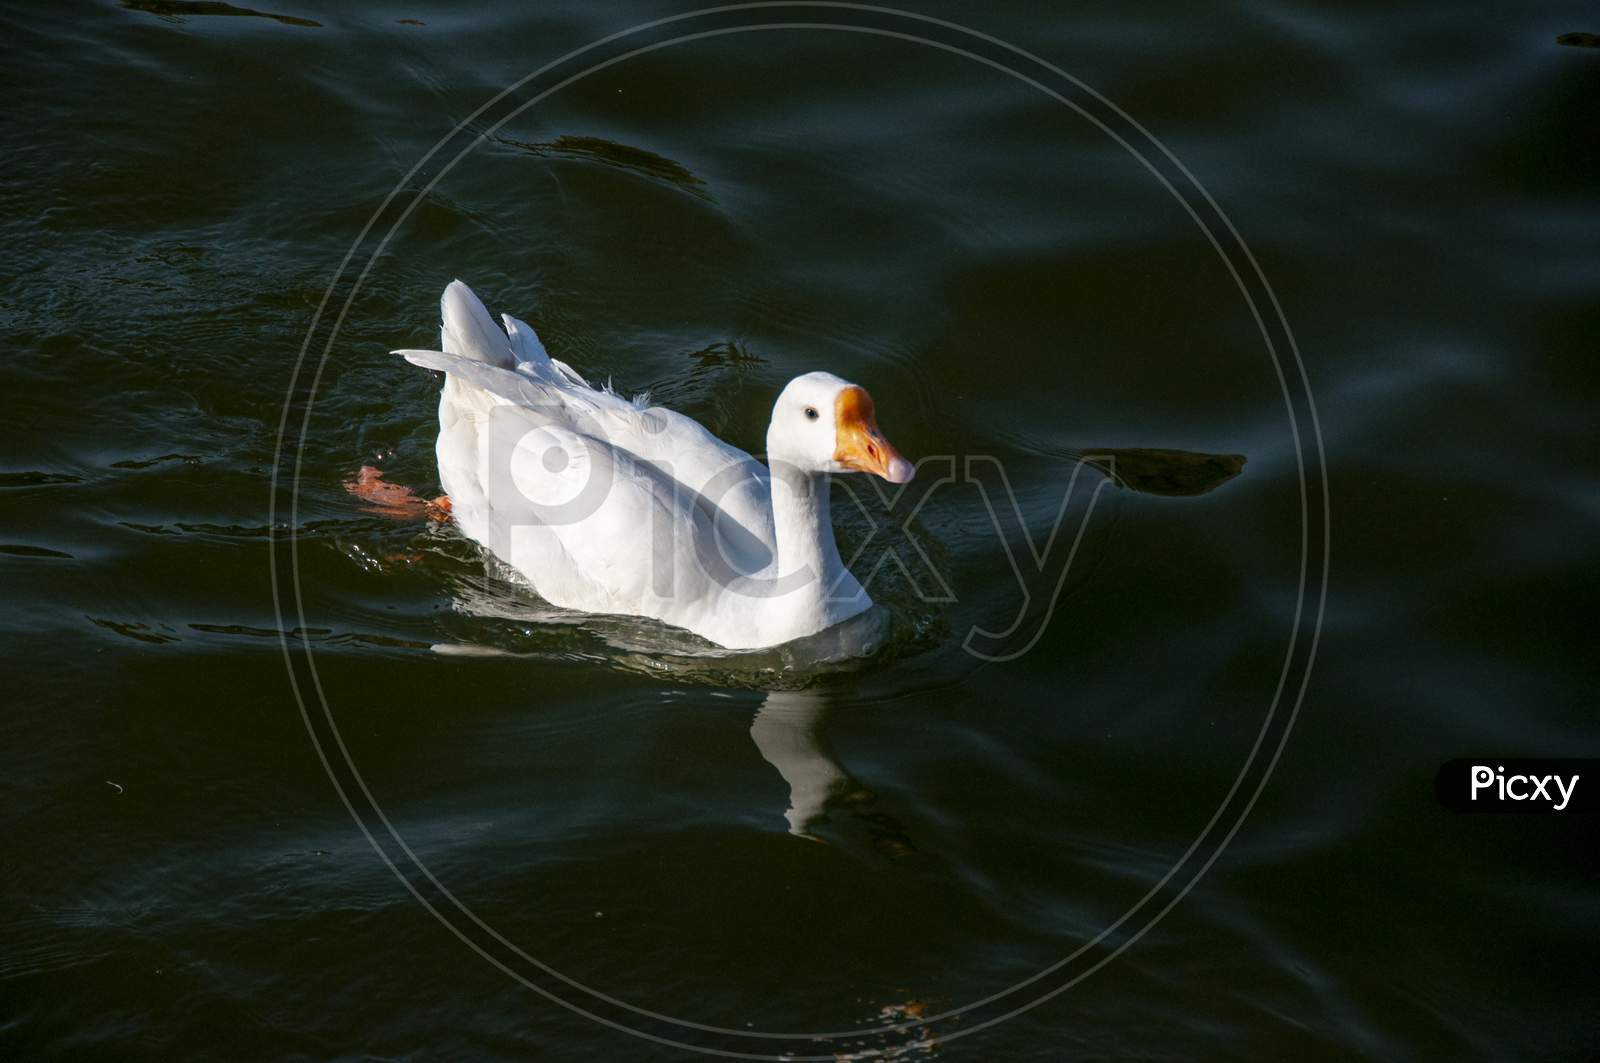 Ducks Are Swimming On The Nakki Lake Of Mount Abu